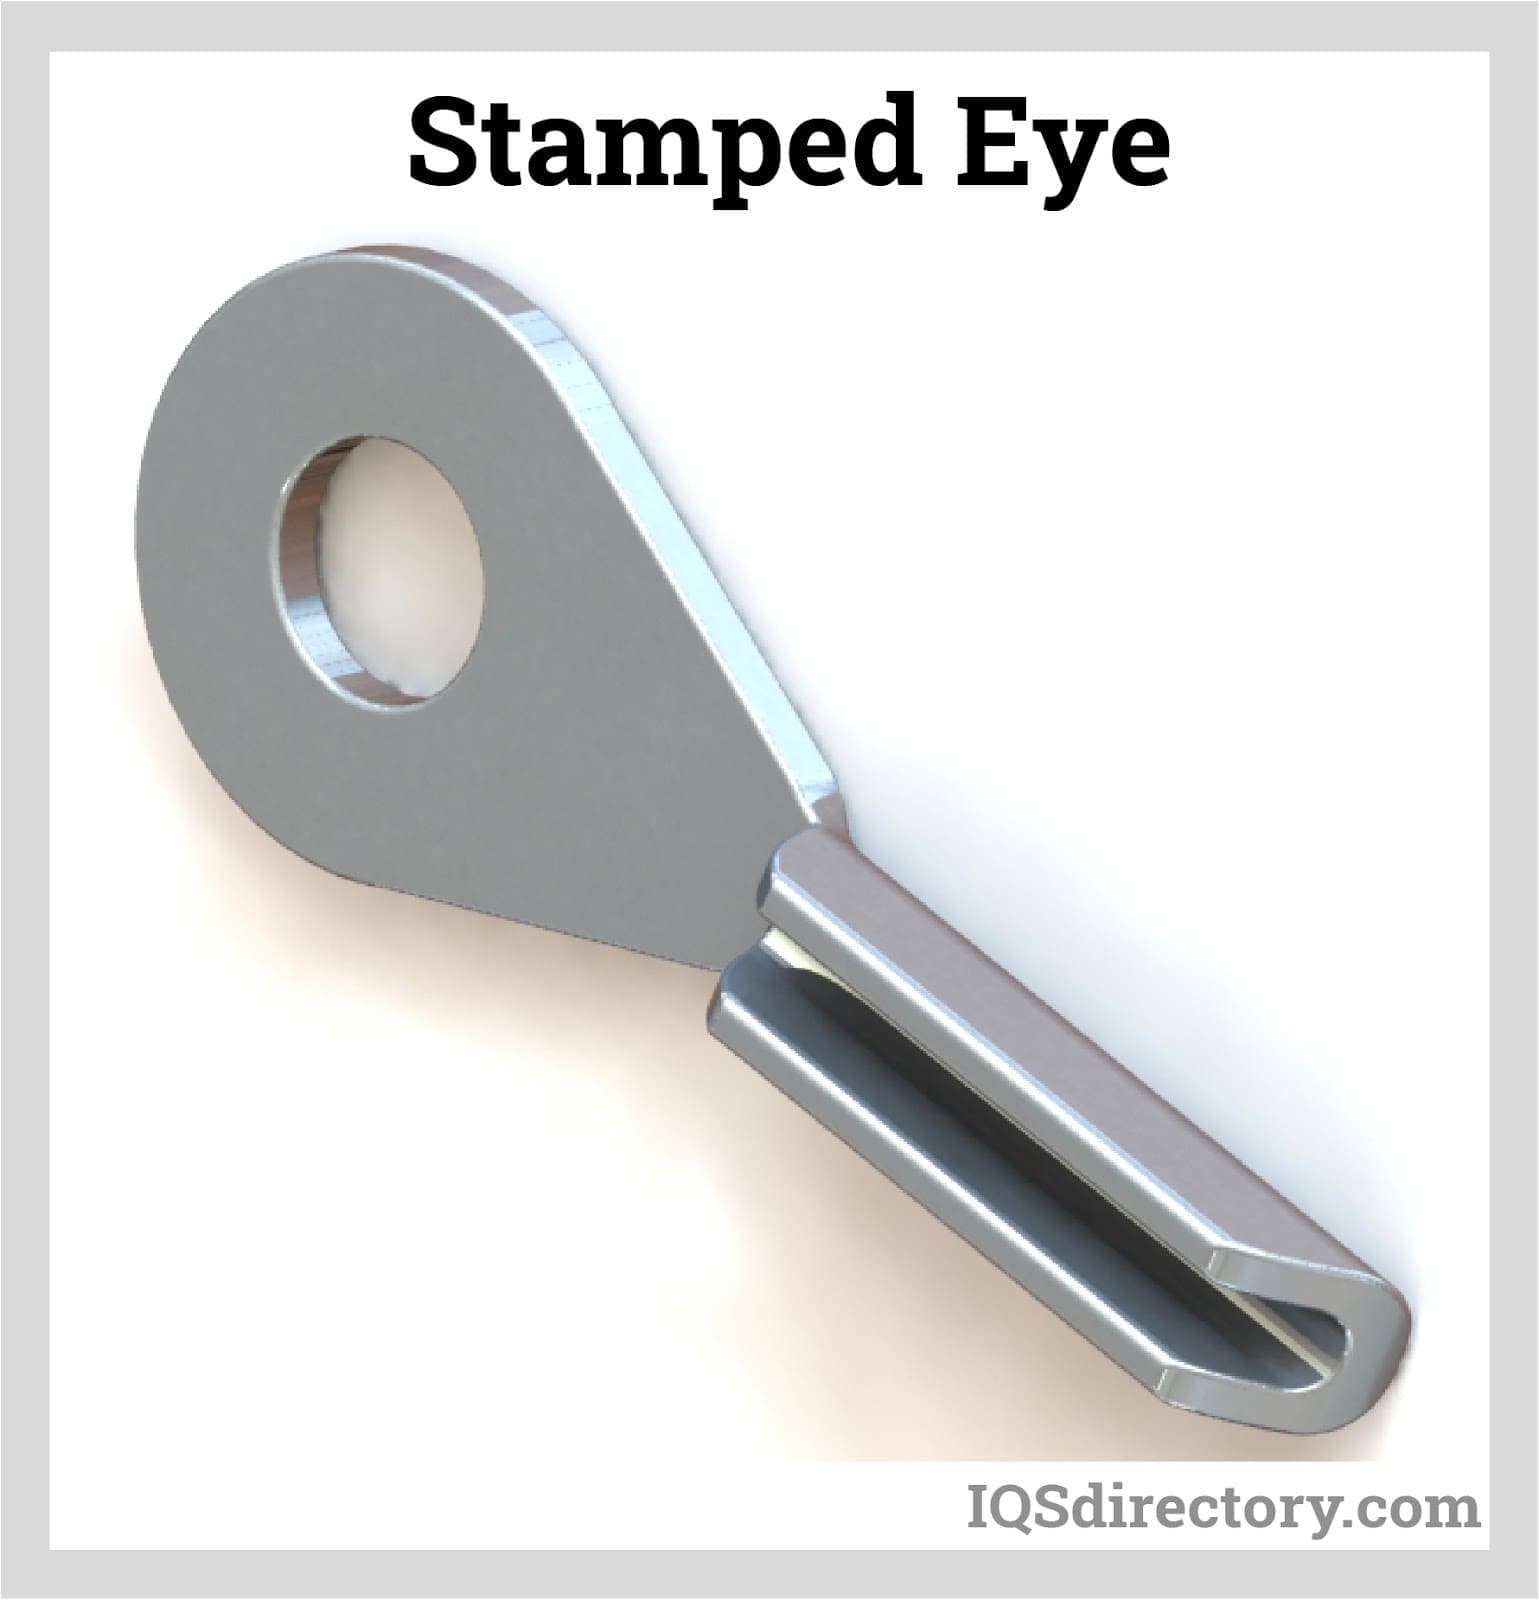 Stamped Eye